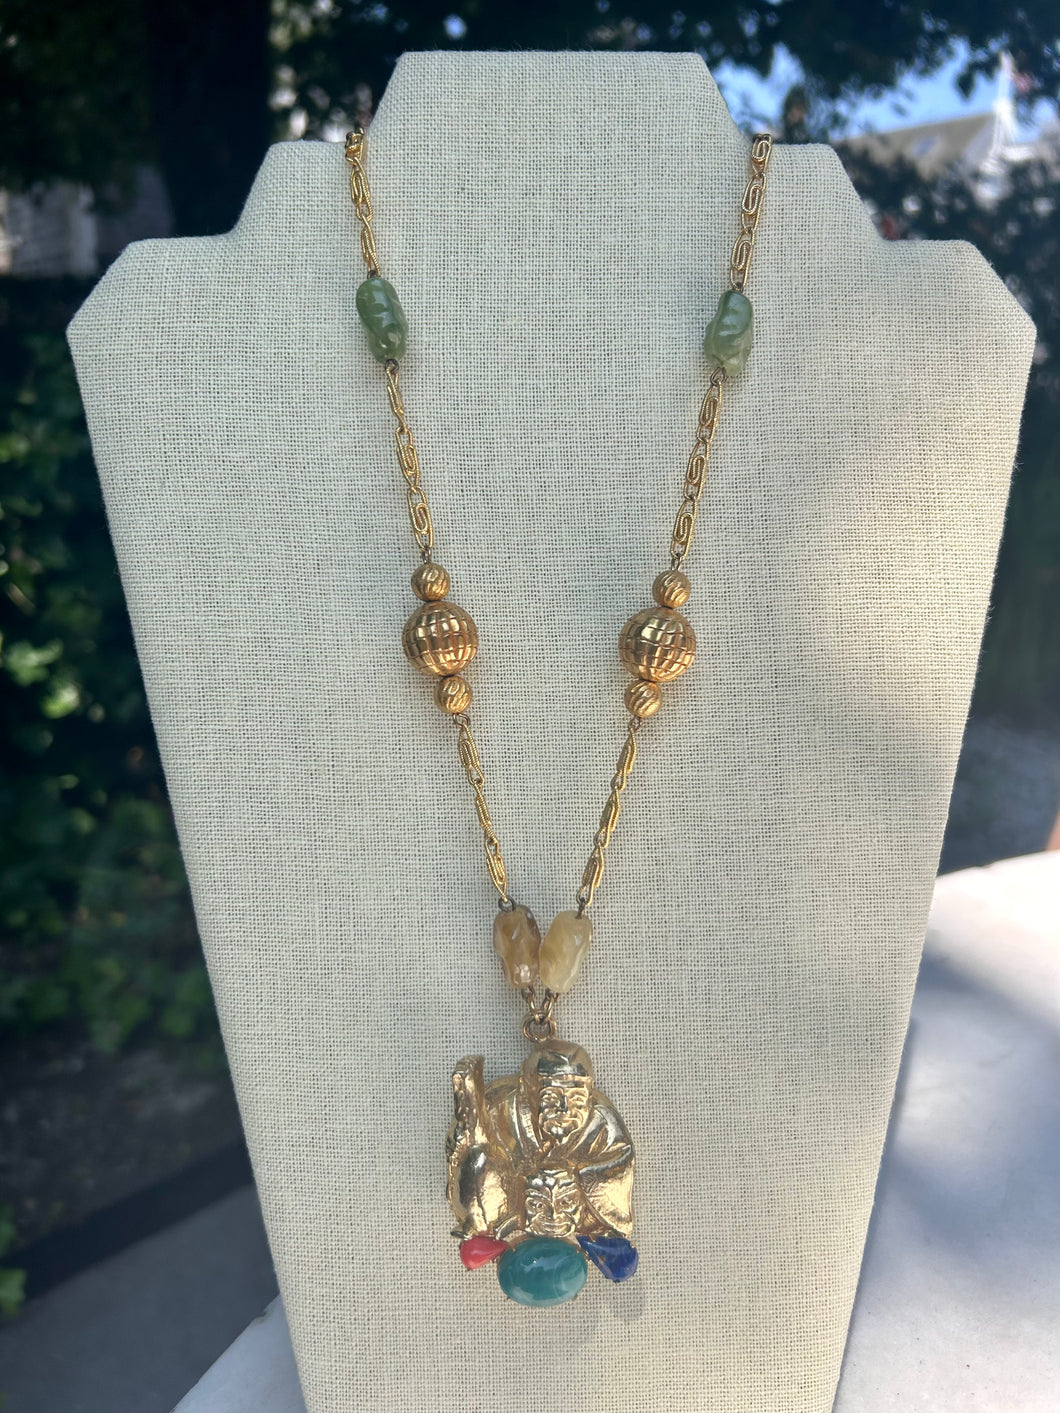 Vintage Golden Chain Necklace with Multi-Color Stones & Asian Pendant